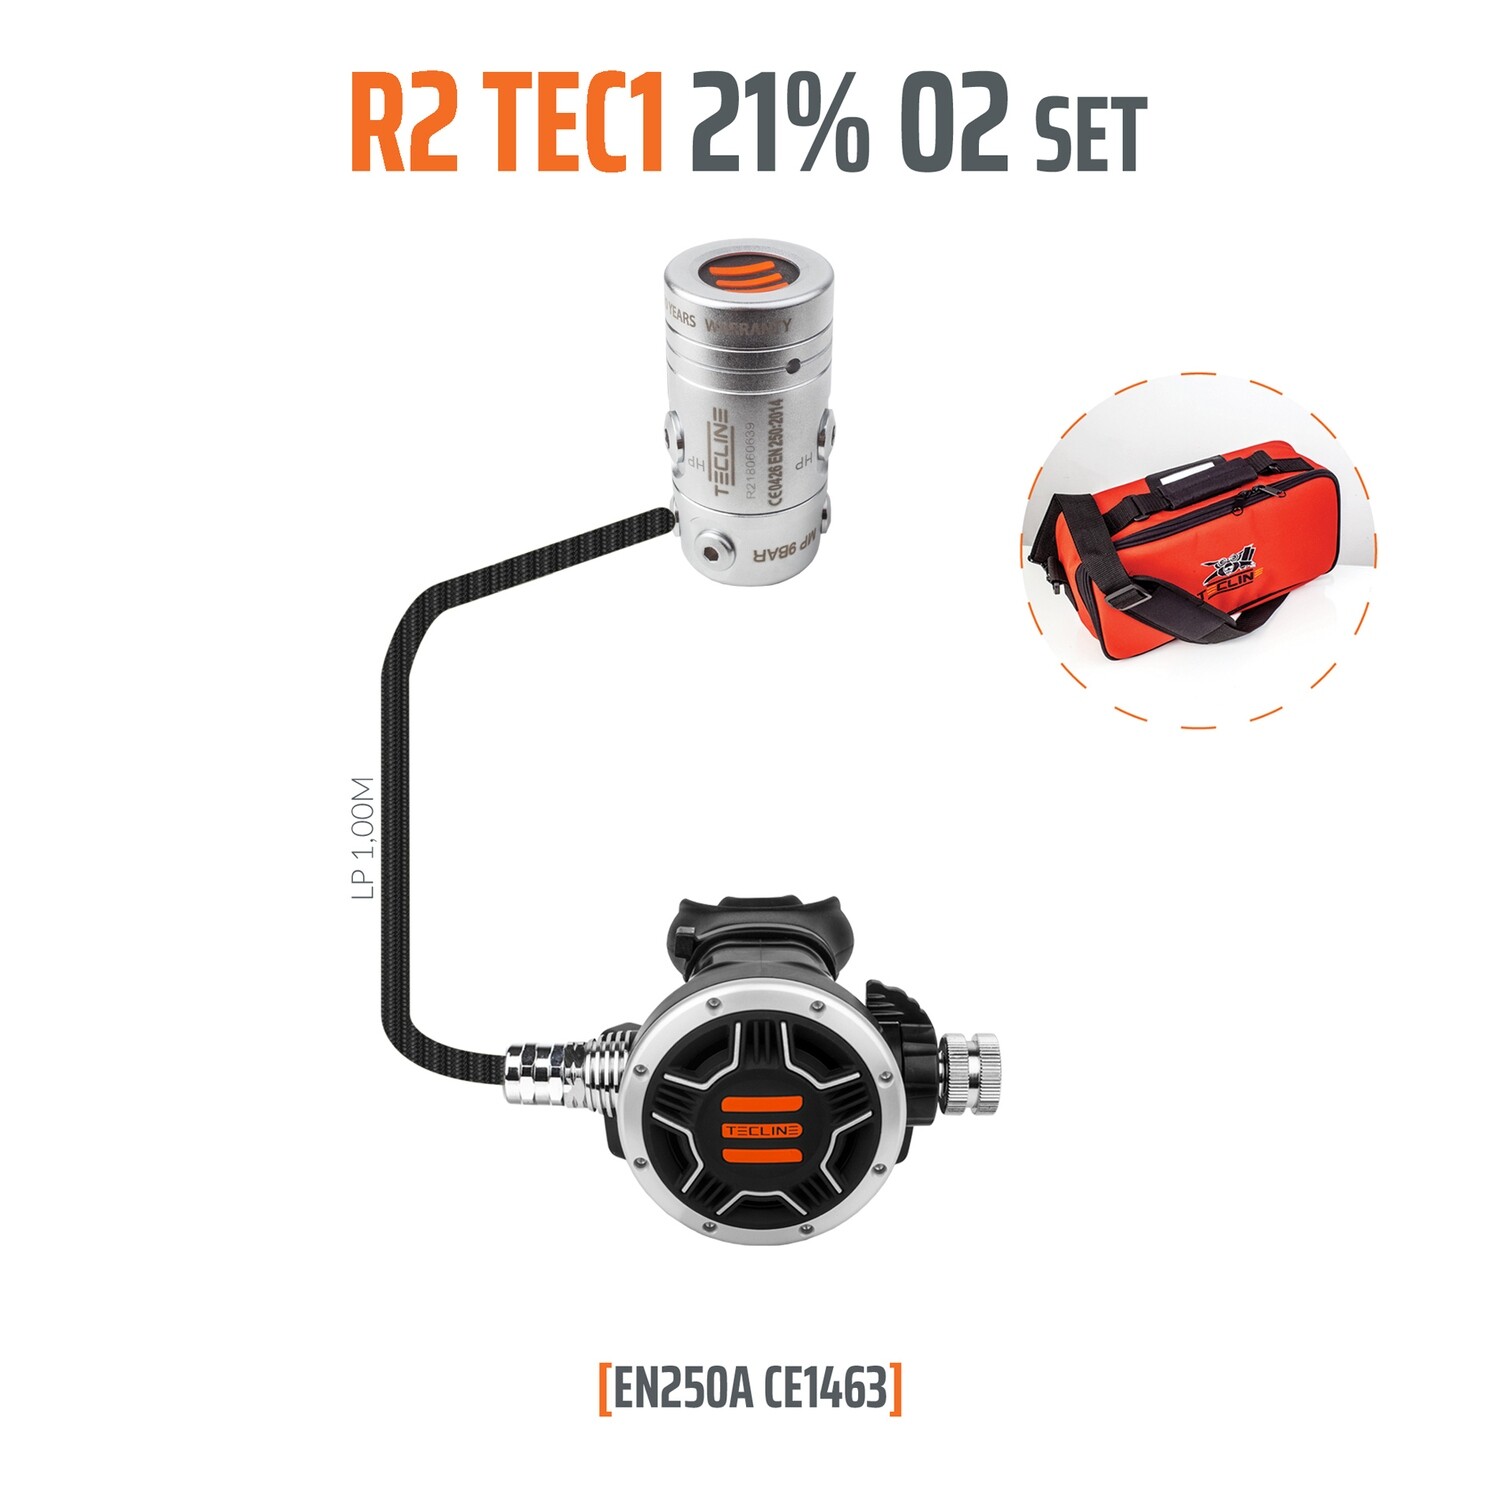 Regulator R2 TEC1 21% O2 G5/8, stage set